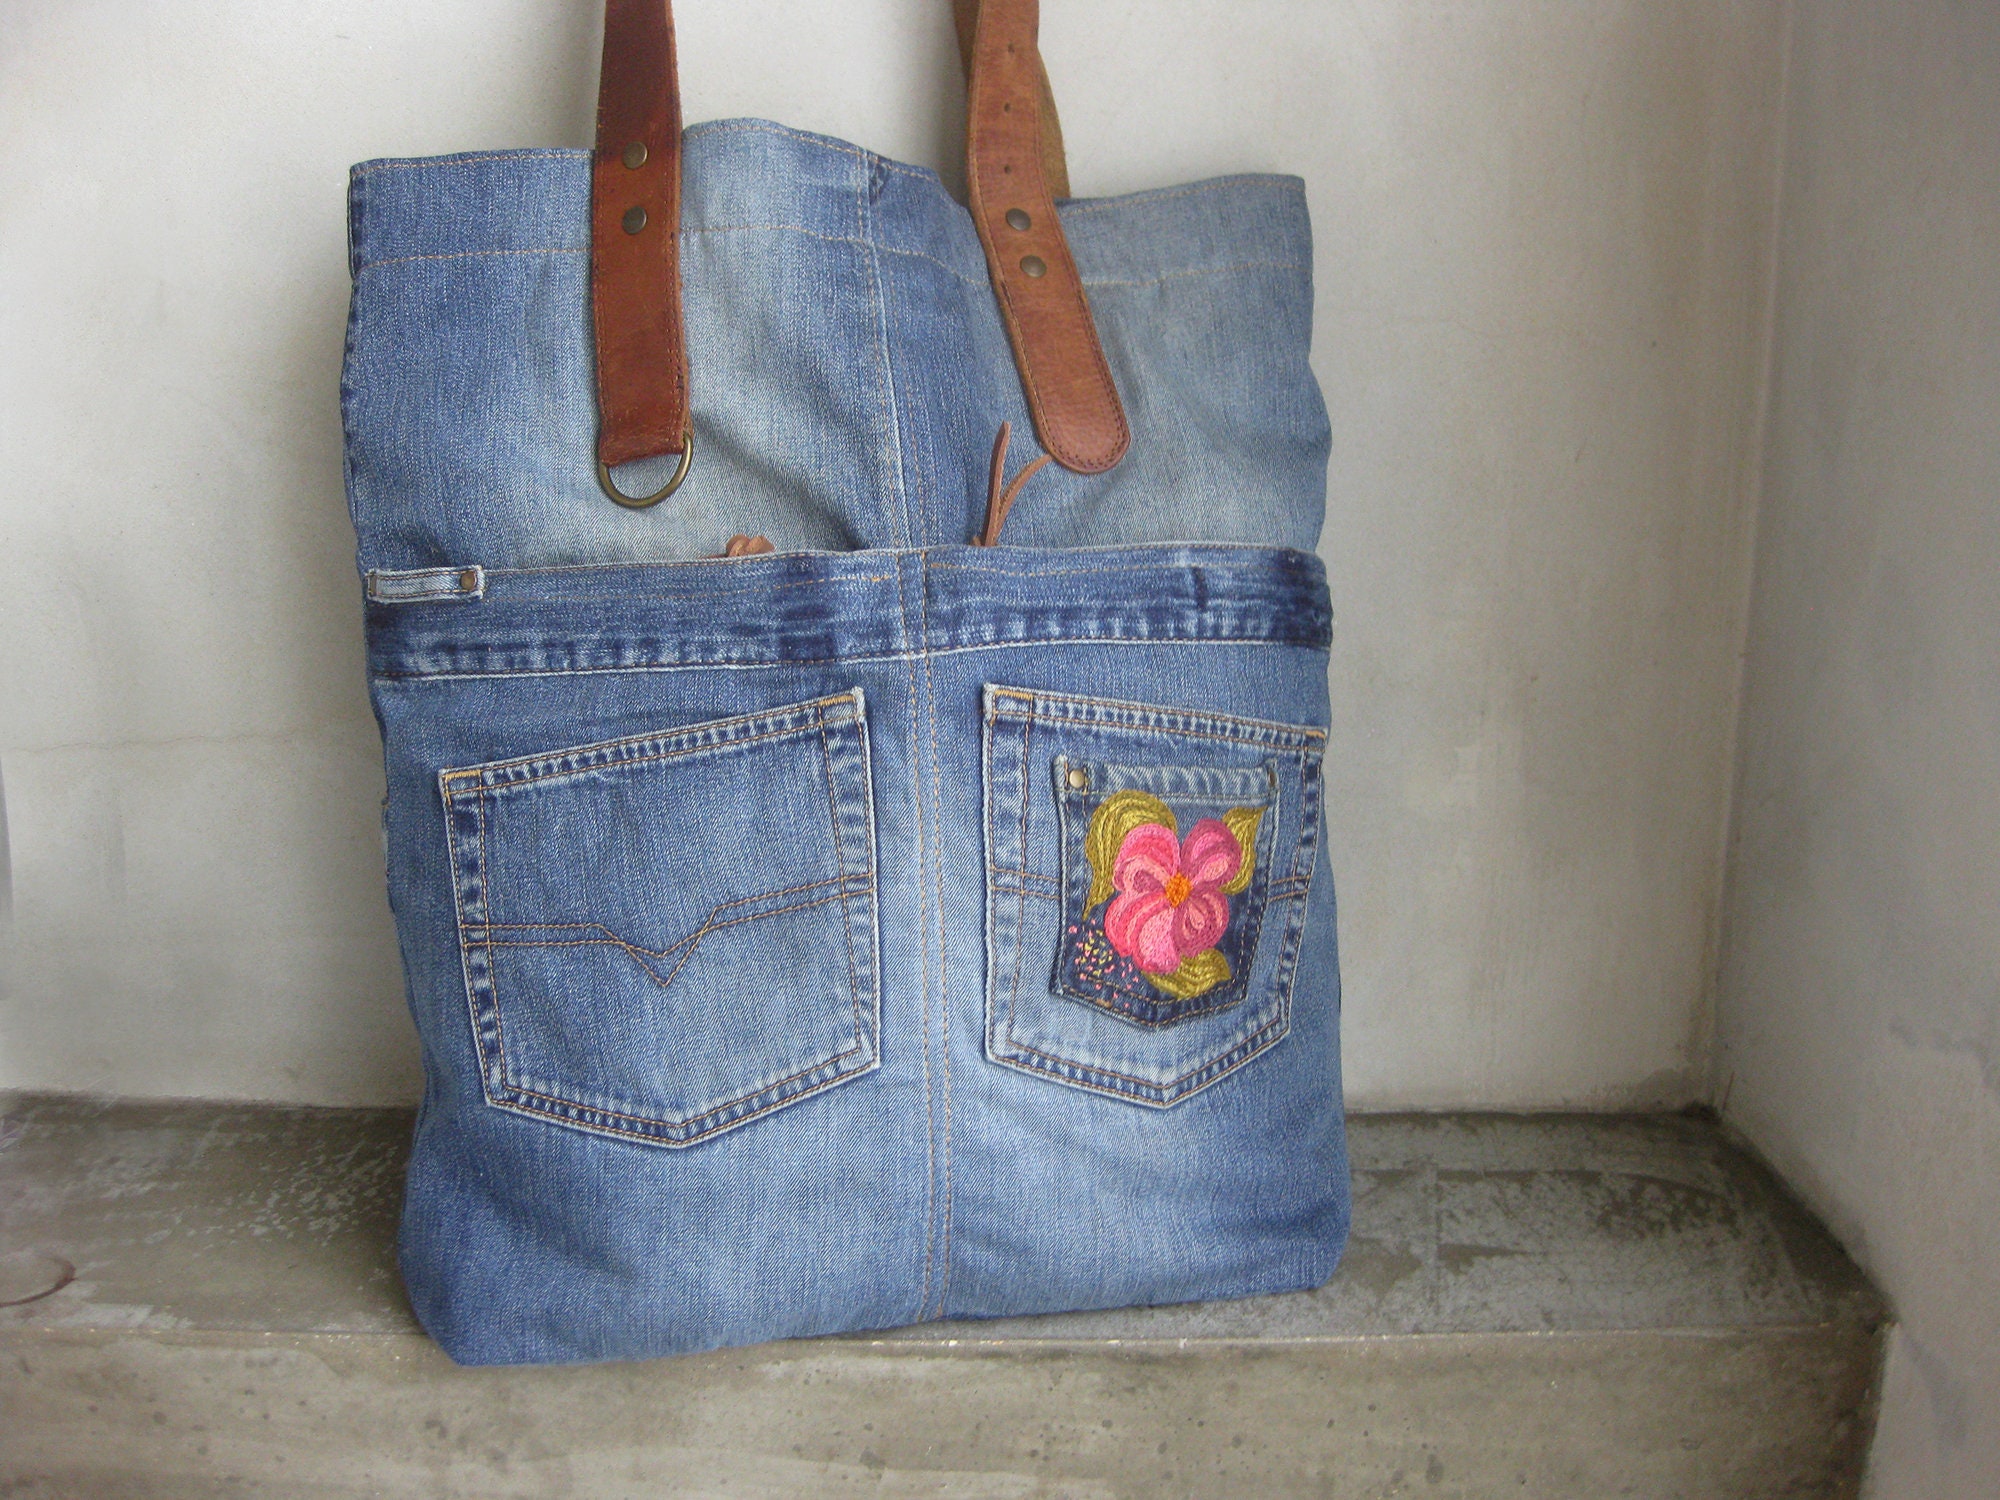 Jeans Bag Blue Tote Bag Weekender Bag Recycled Bag Denim - Etsy